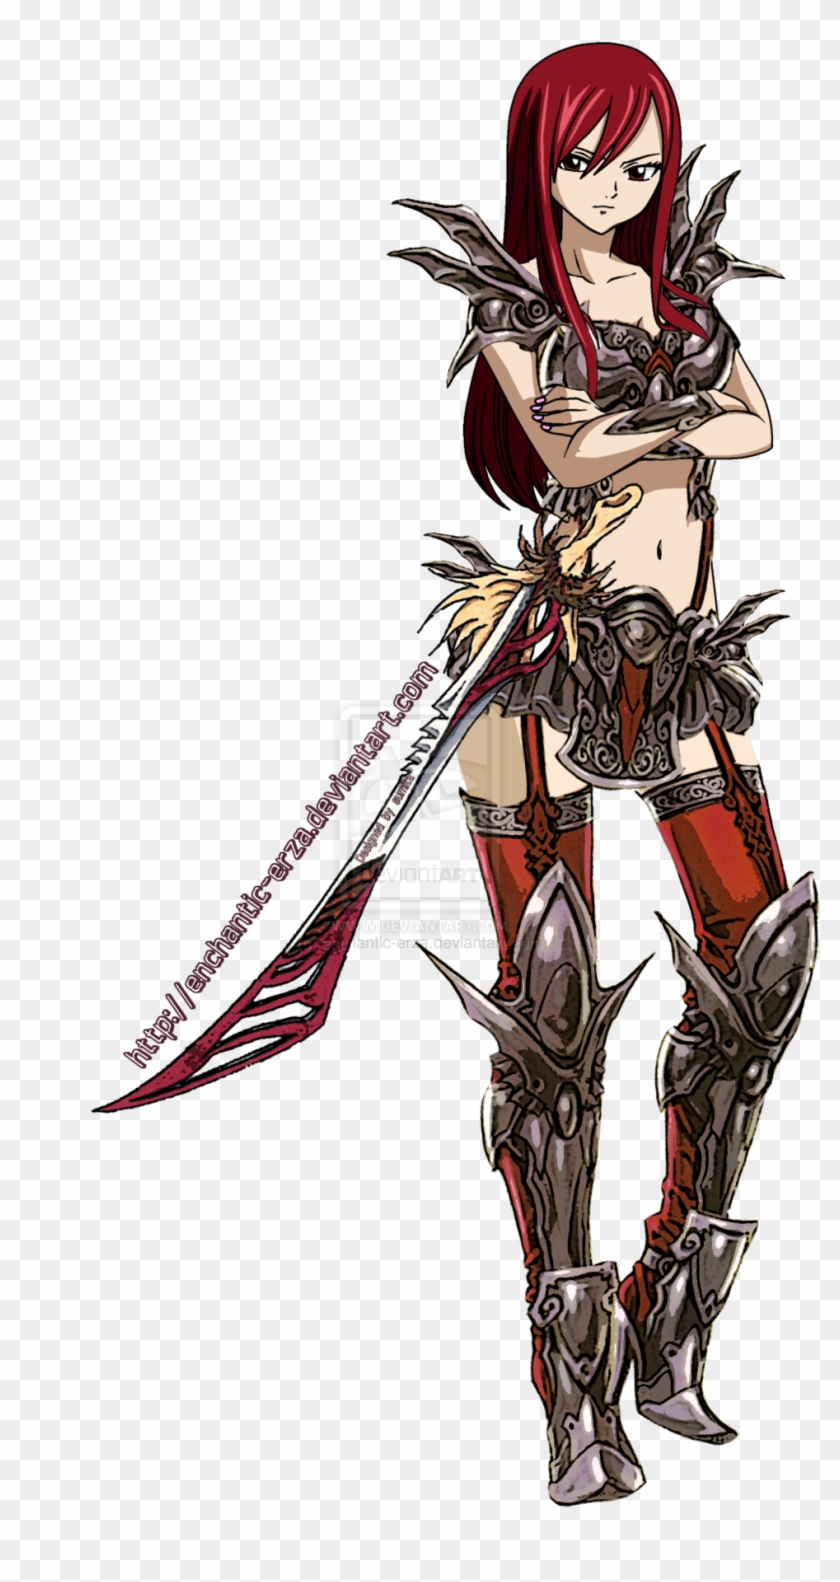 Fairy Tail Erza Scarlet Armor - Erza Scarlet Armor Clipart